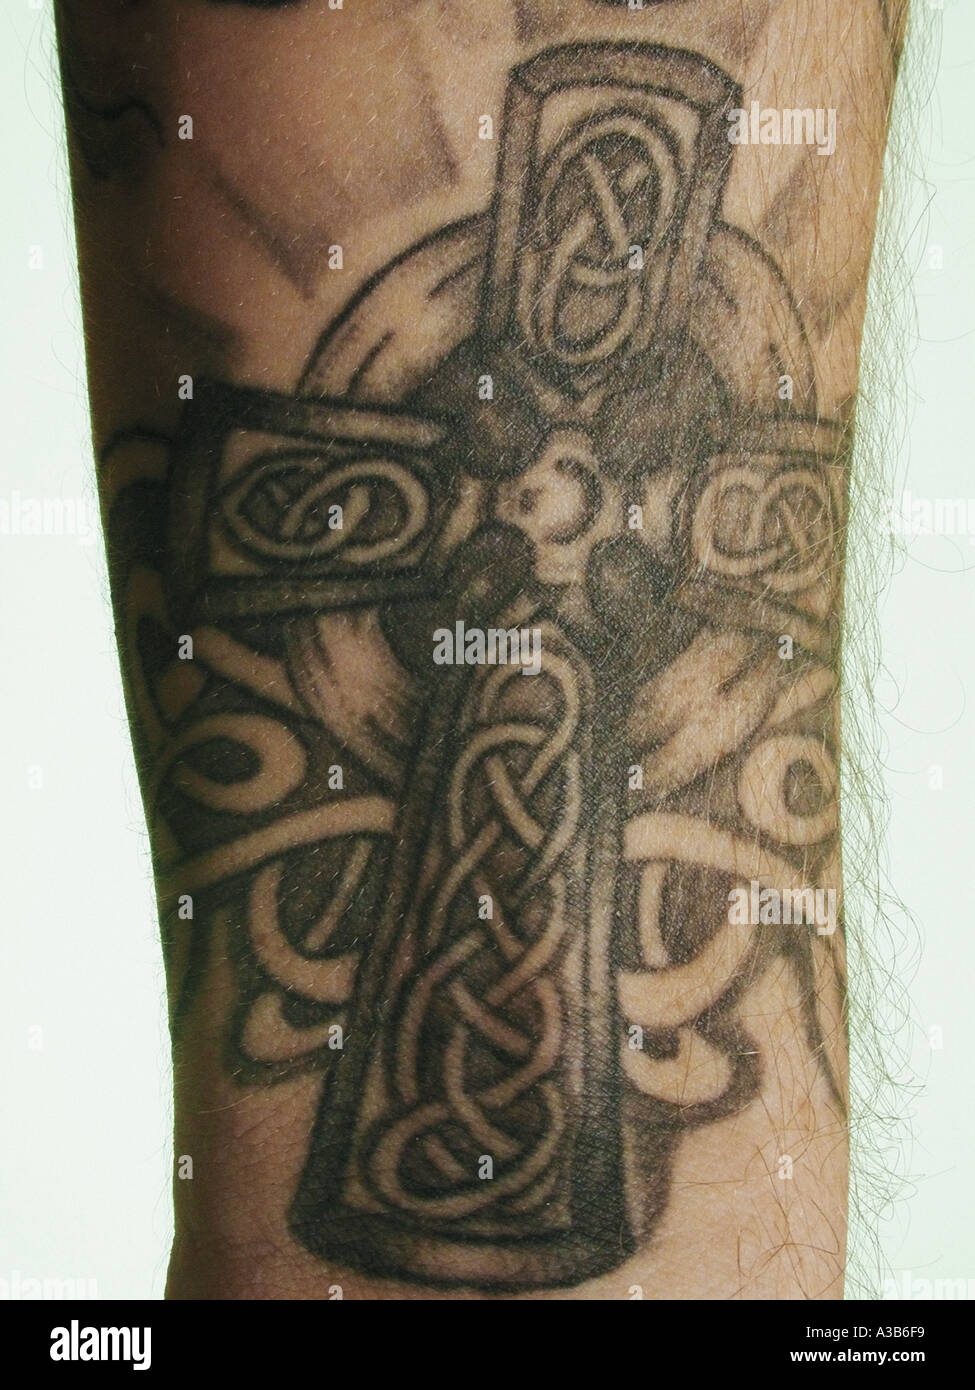 Crucifix tattoo on forearm of caucasian man close up Stock Photo